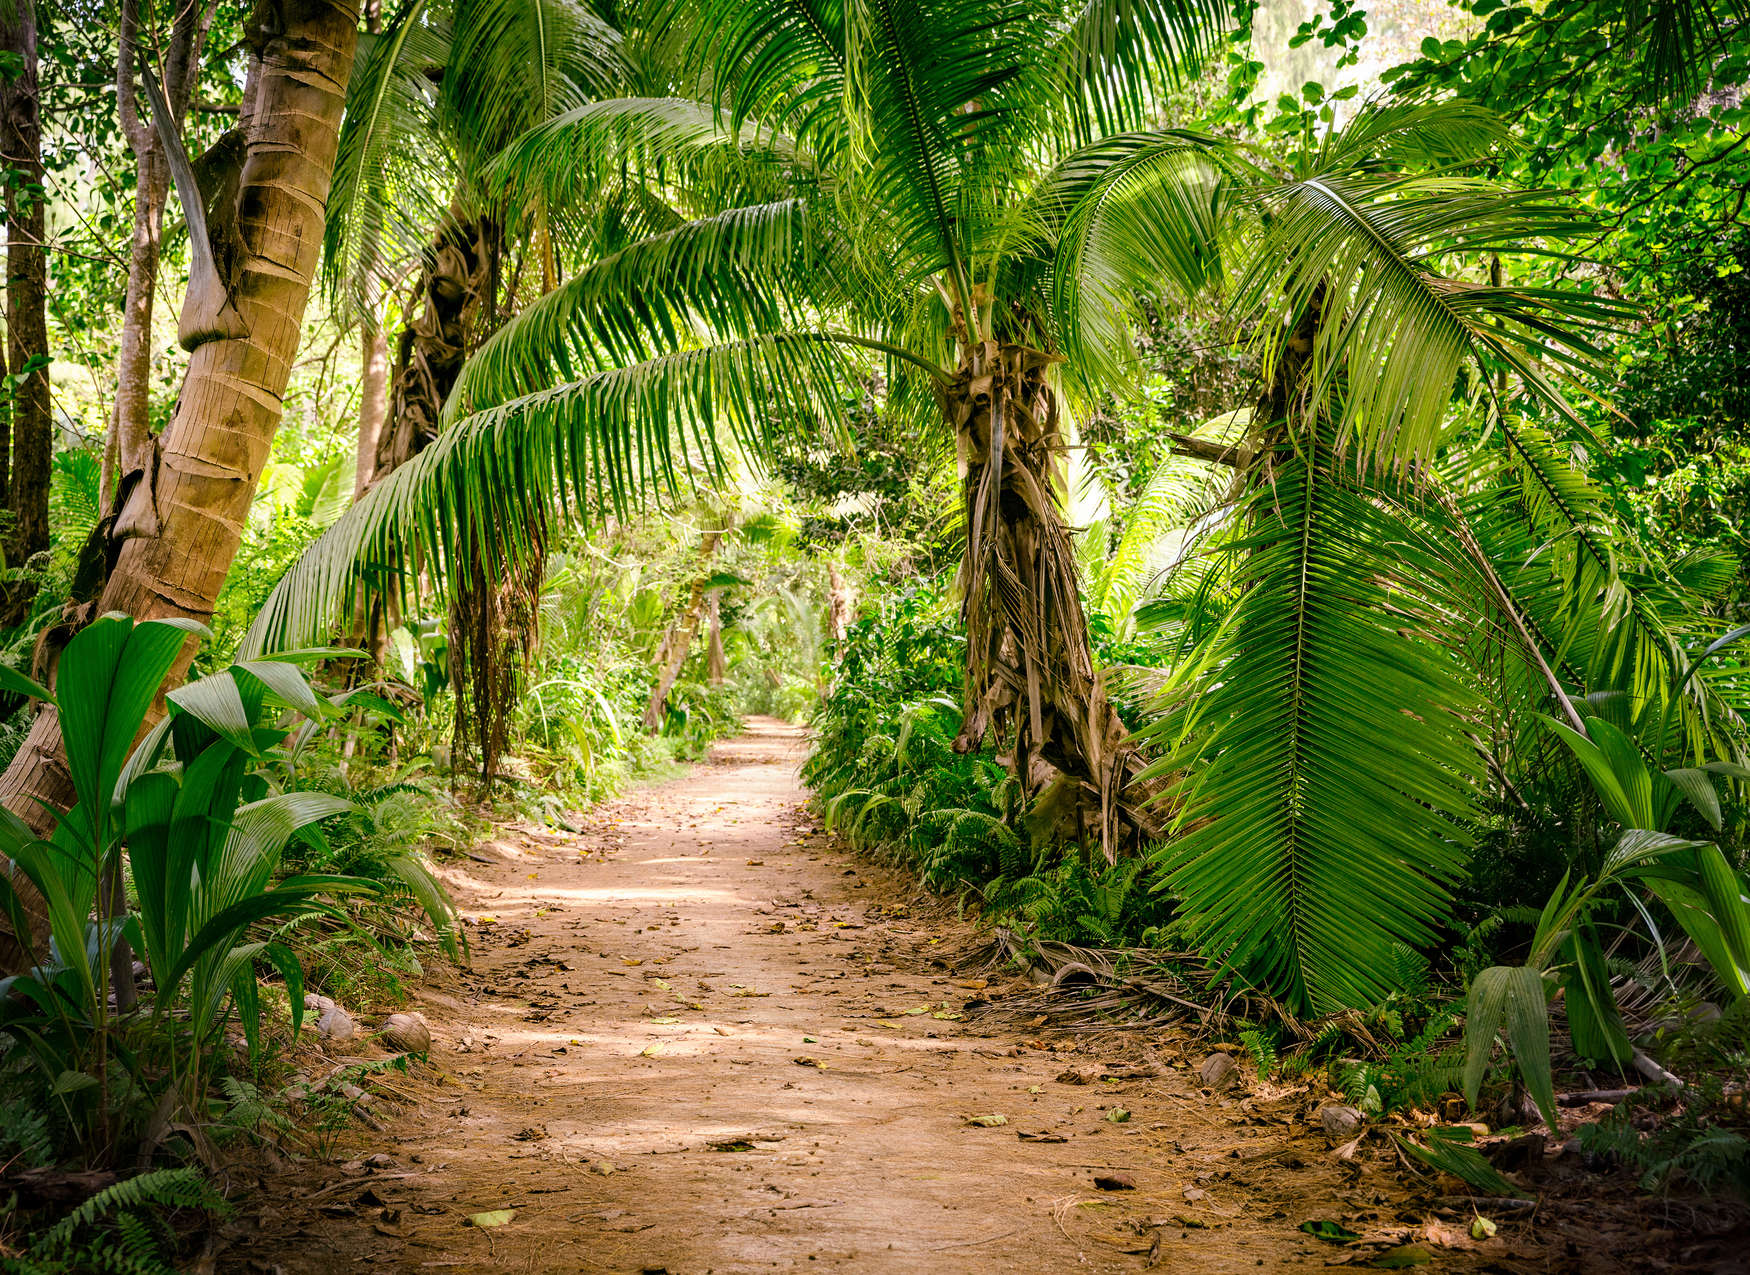             Palm Tree Trail through a Tropical Landscape - Green, Brown
        